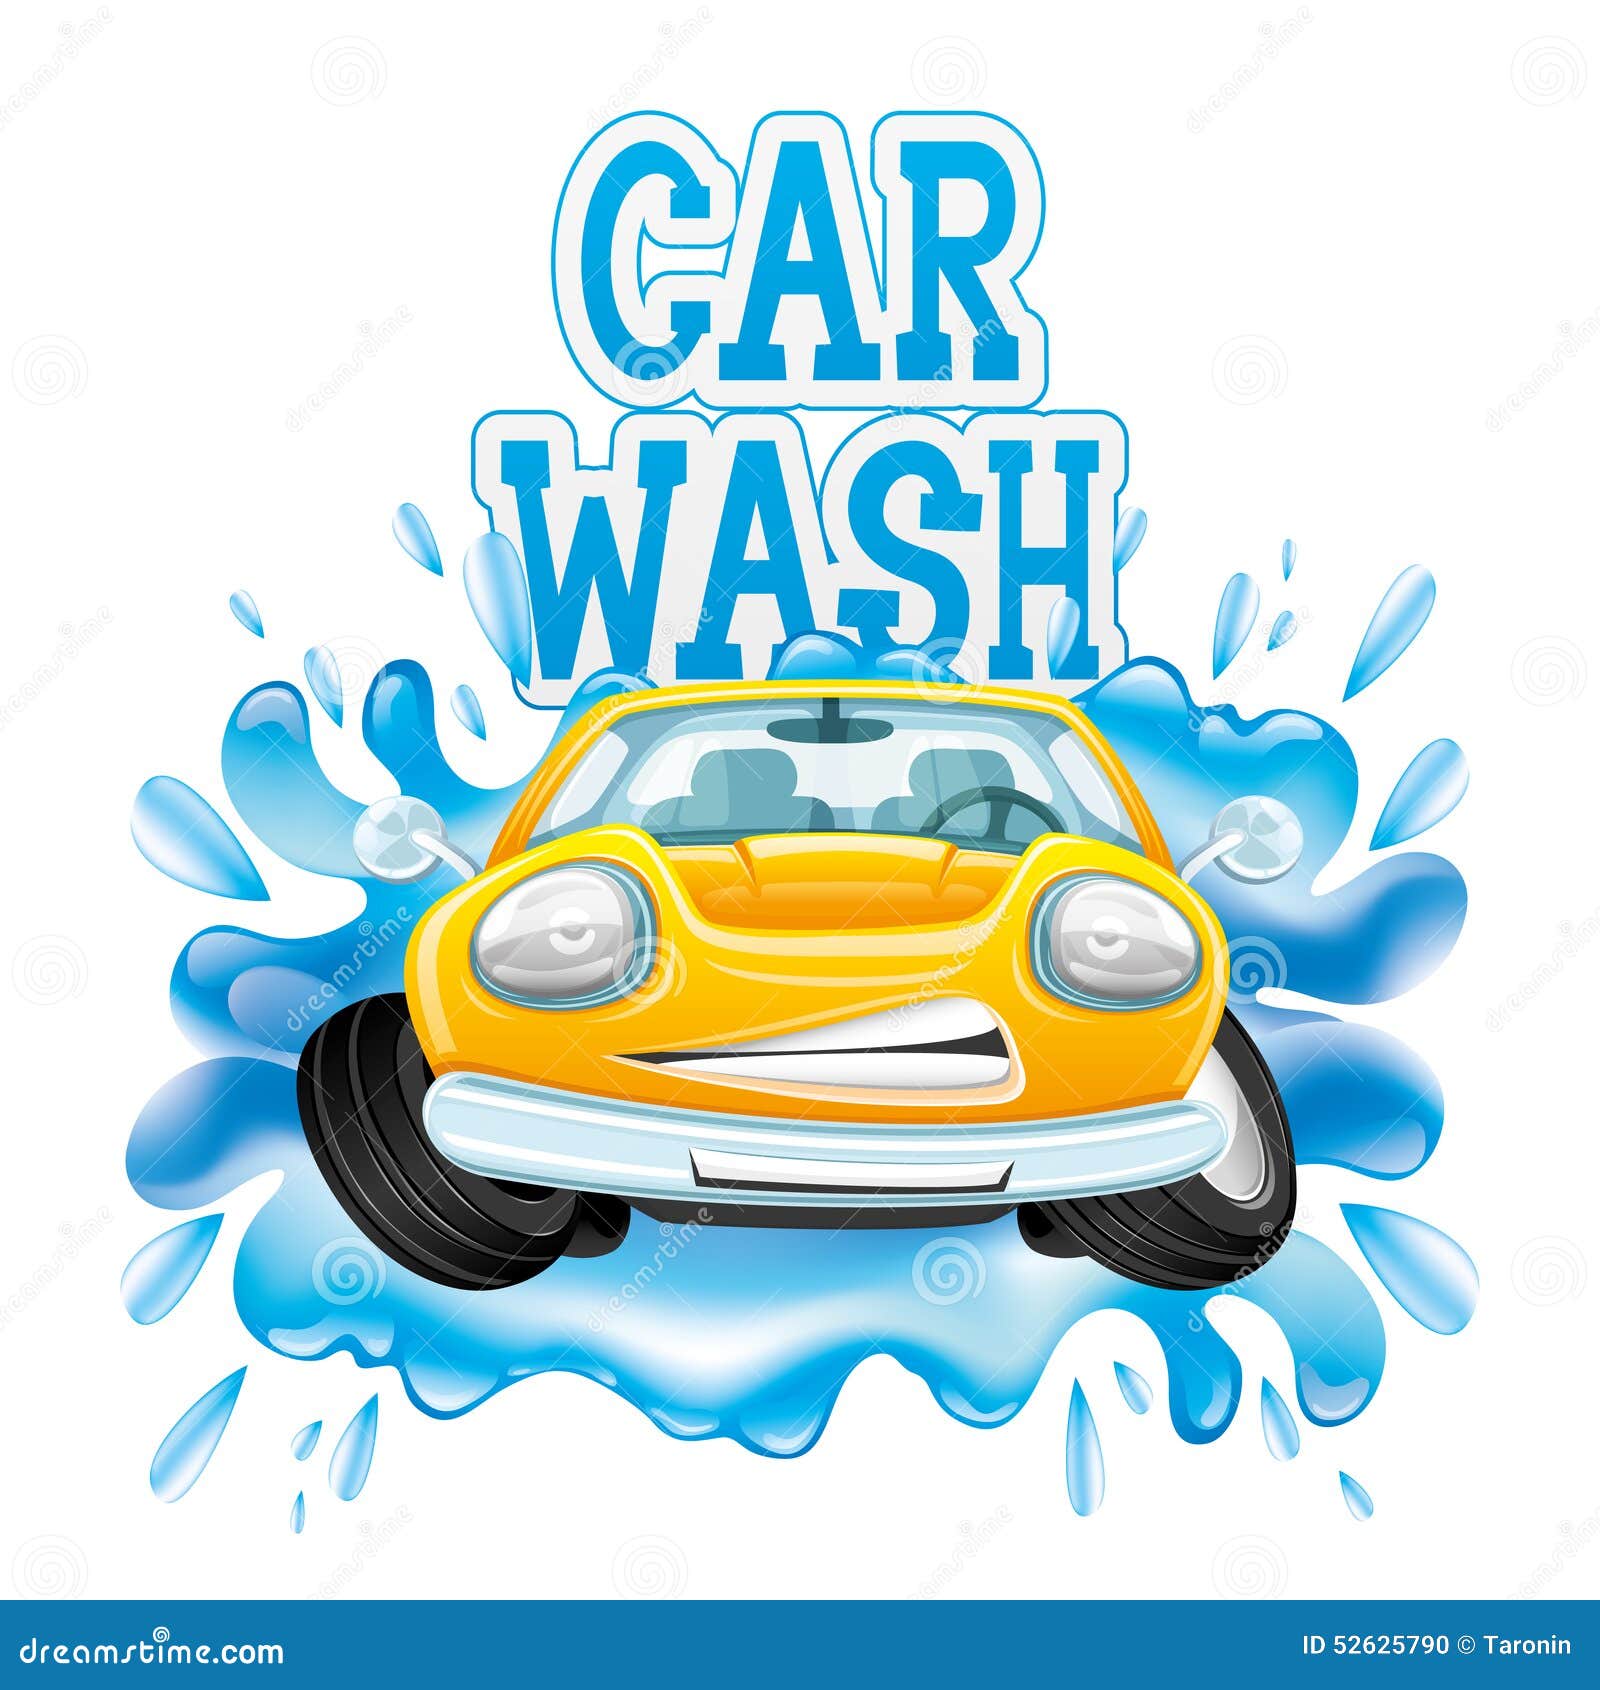 free vector car wash clipart - photo #41